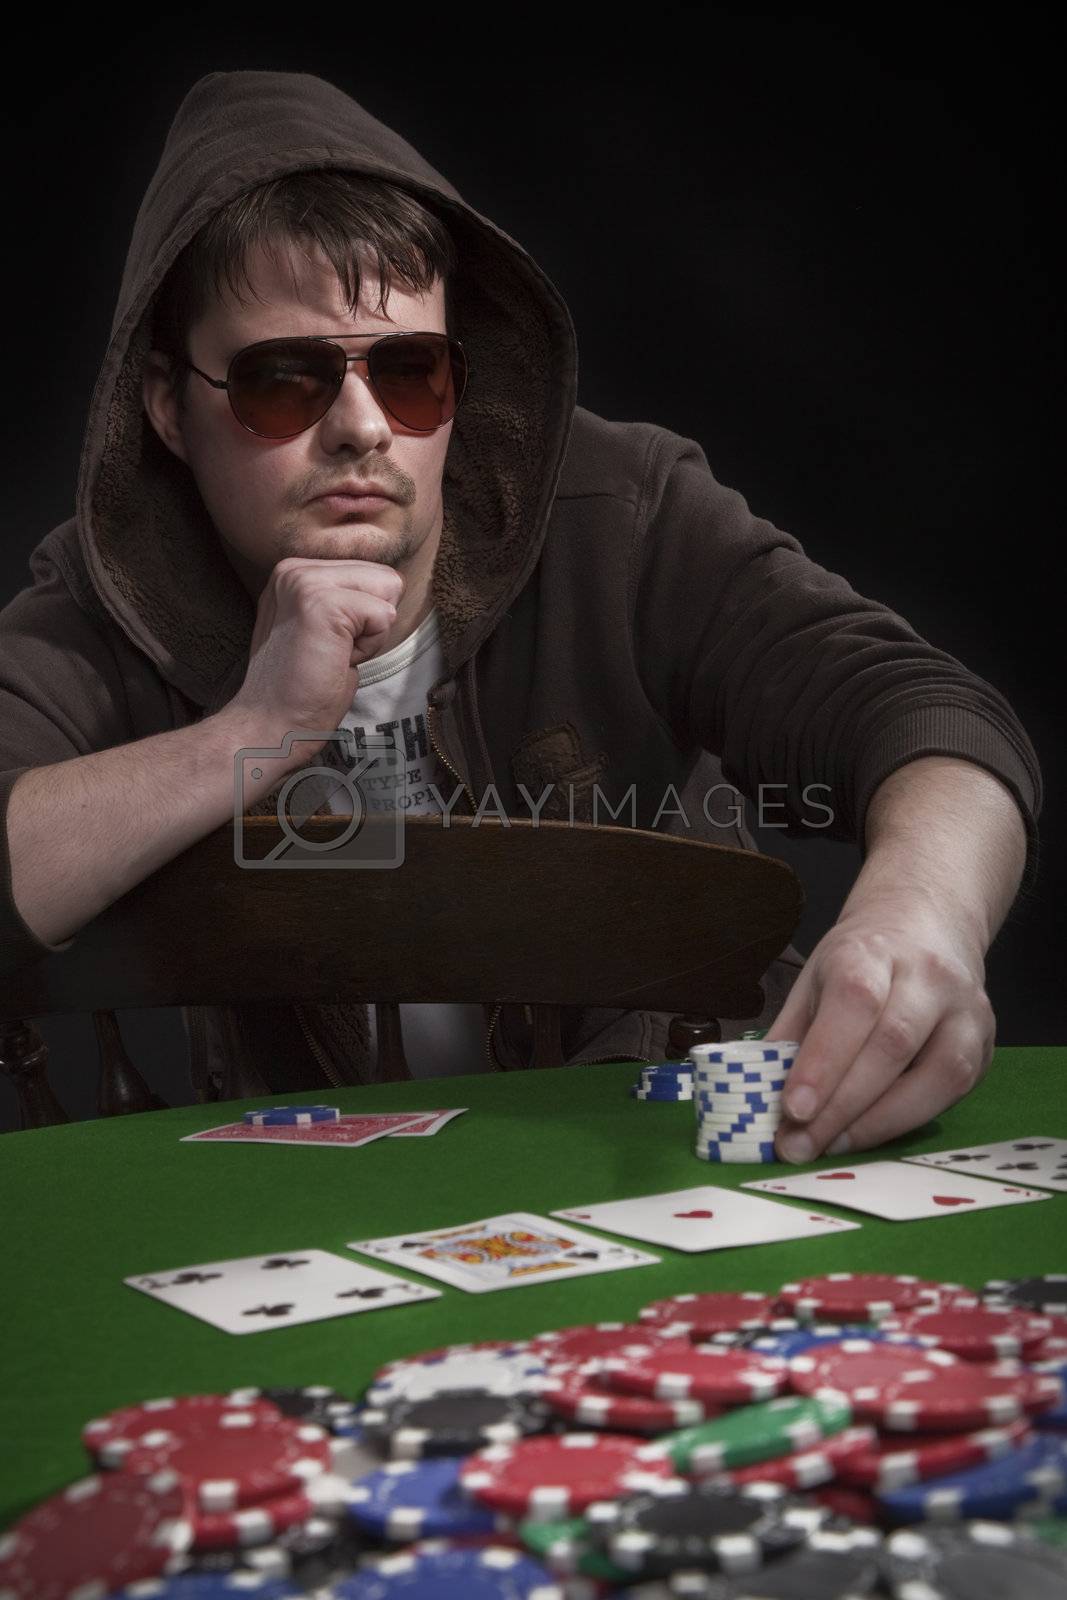 Royalty free image of Man playing poker by mjp